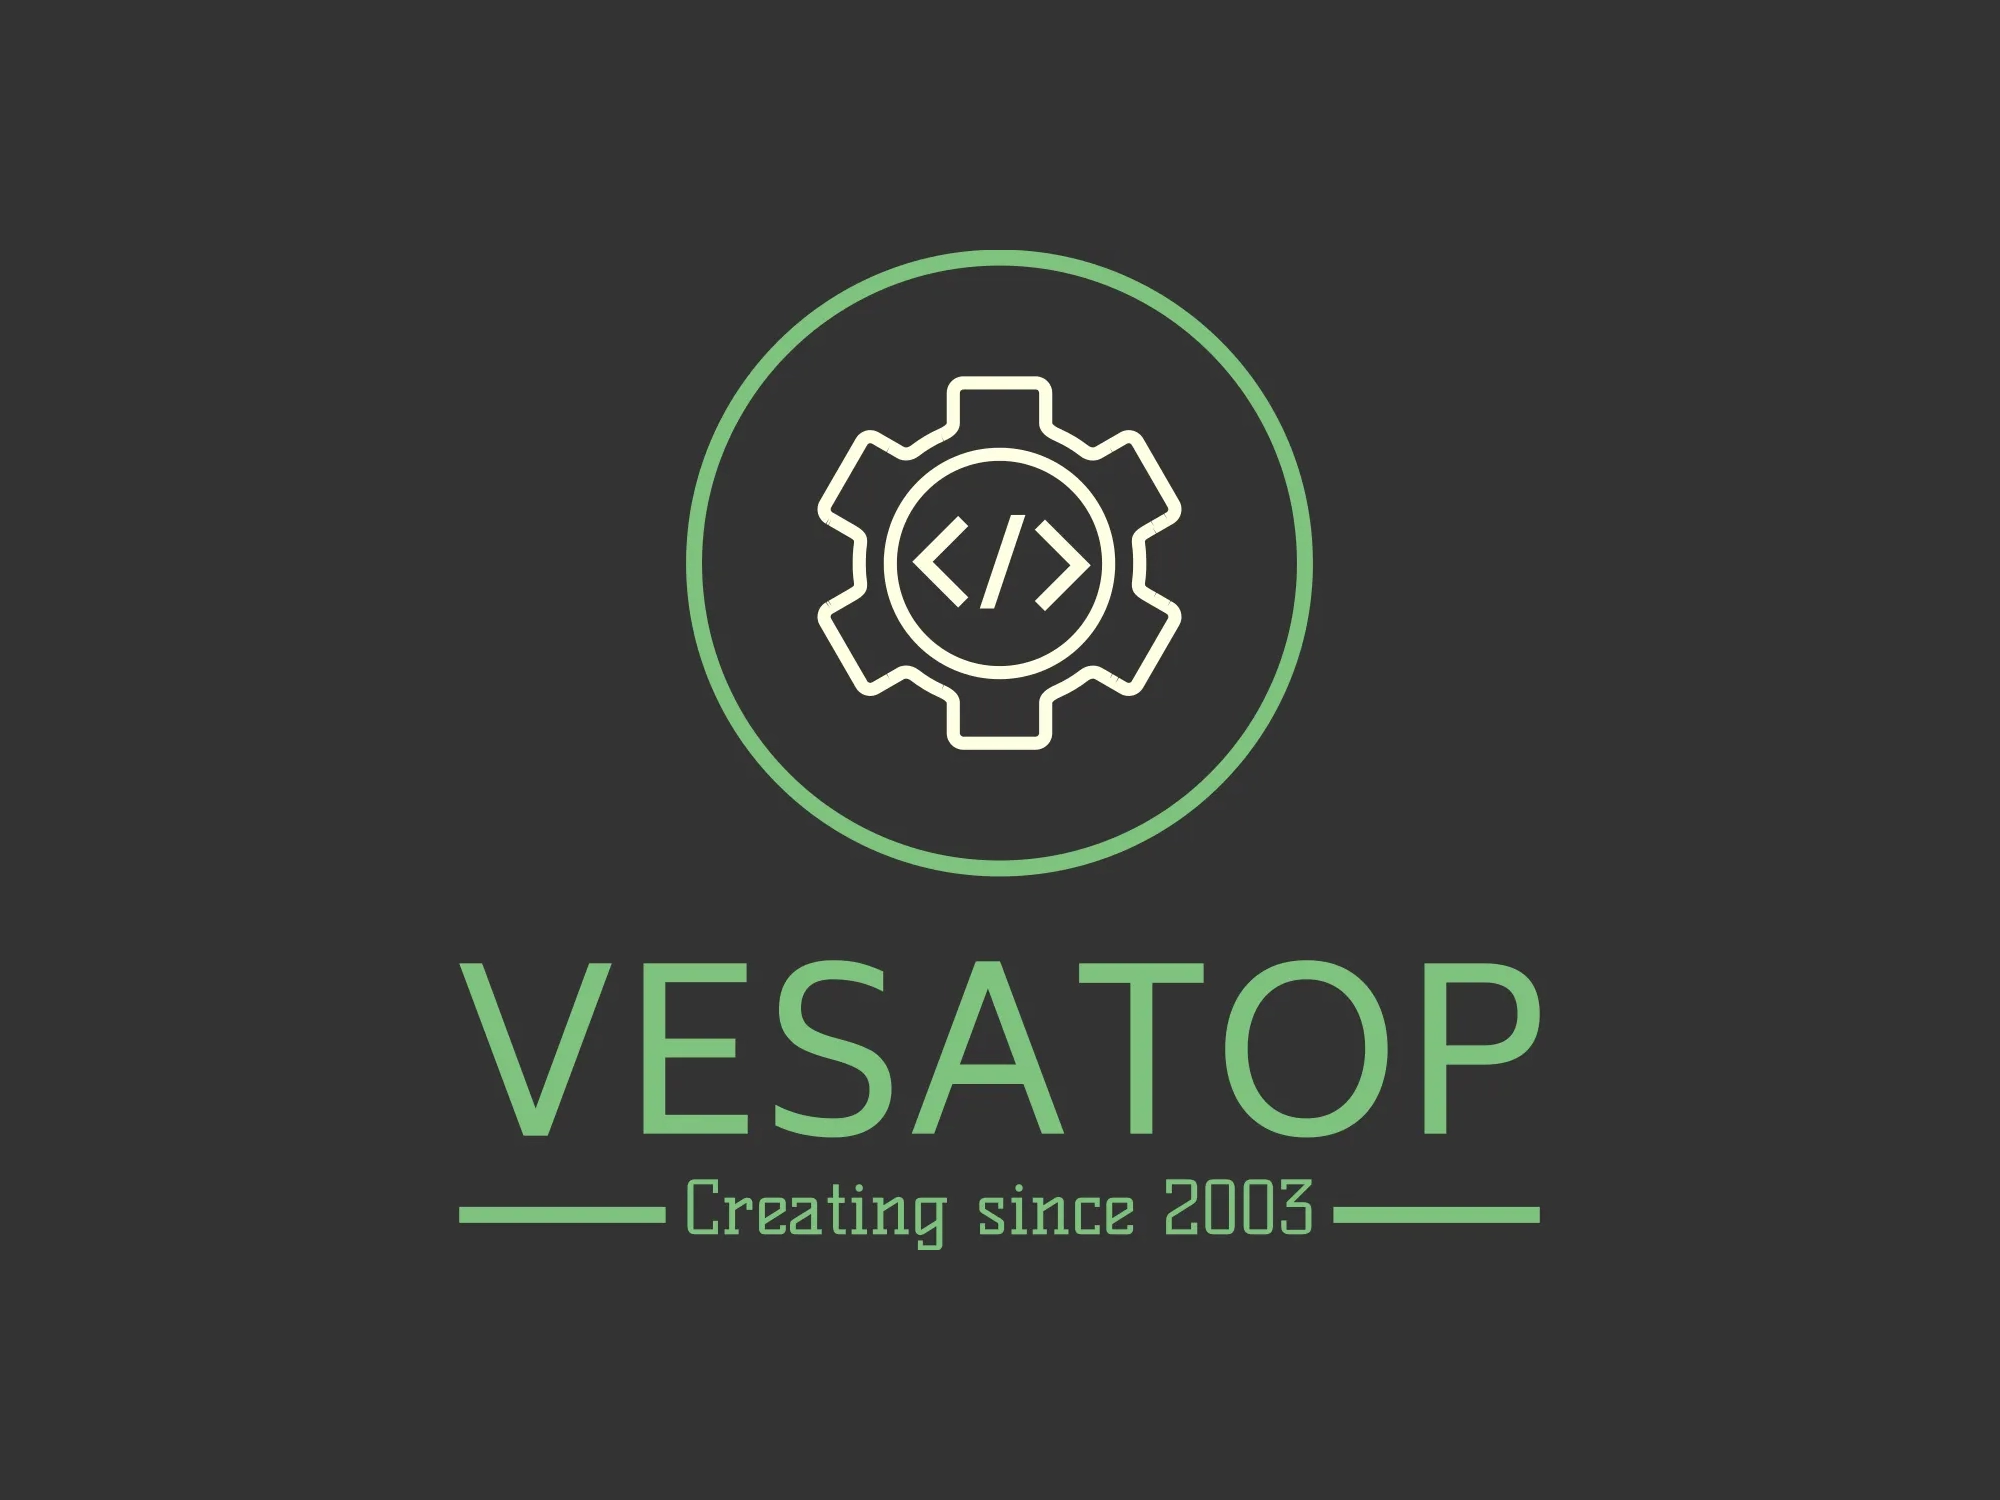 Vesatop - Creating since 2003